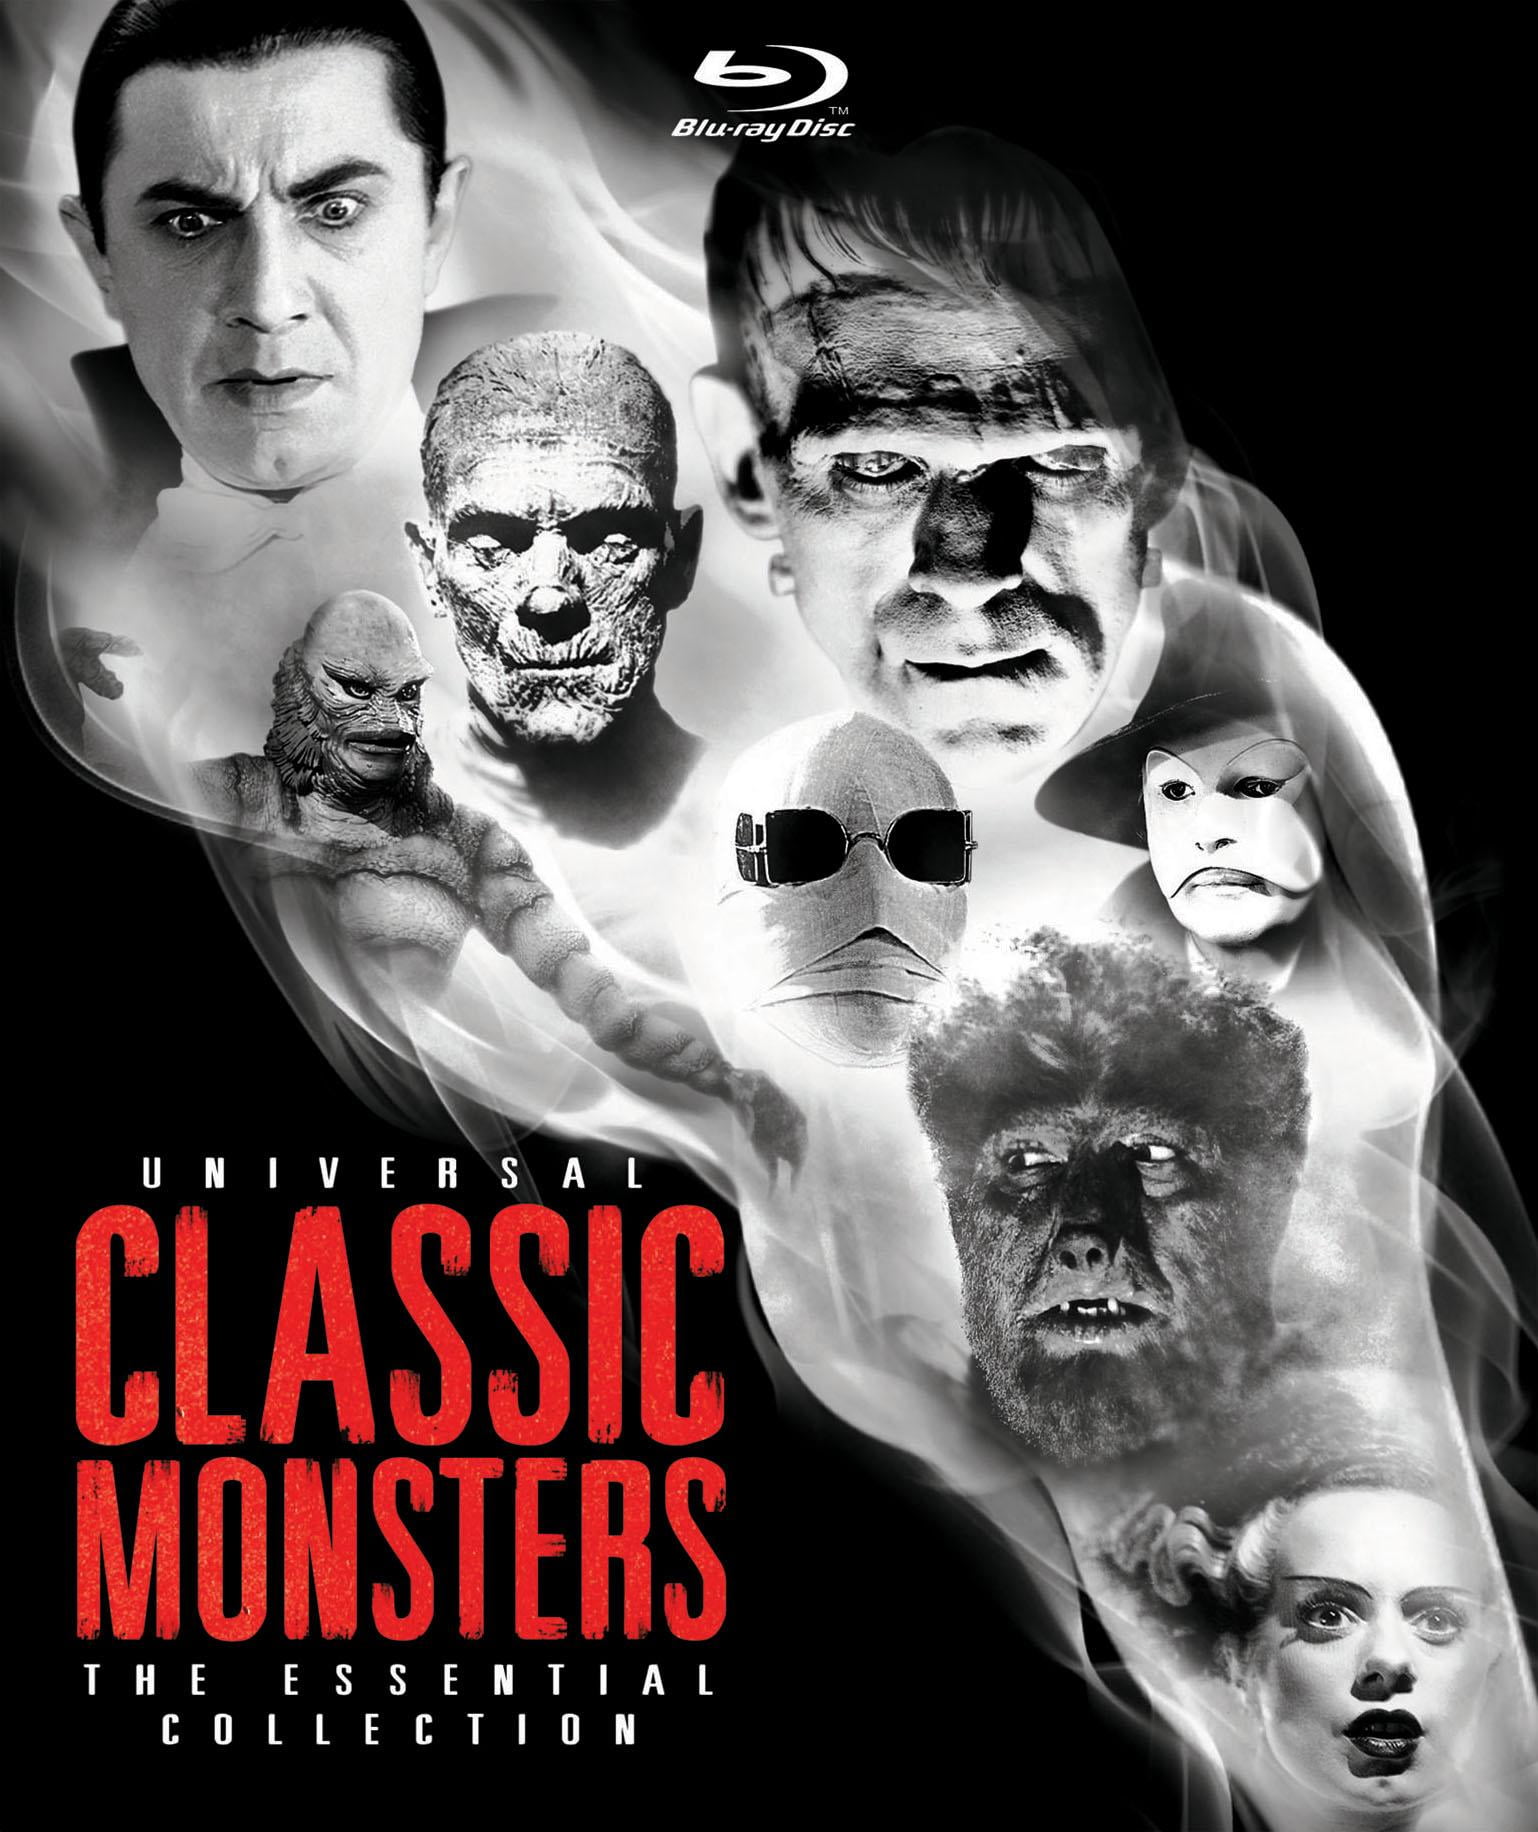 Universal Monsters 5-Guide Bundle Four - Classic Monsters Shop